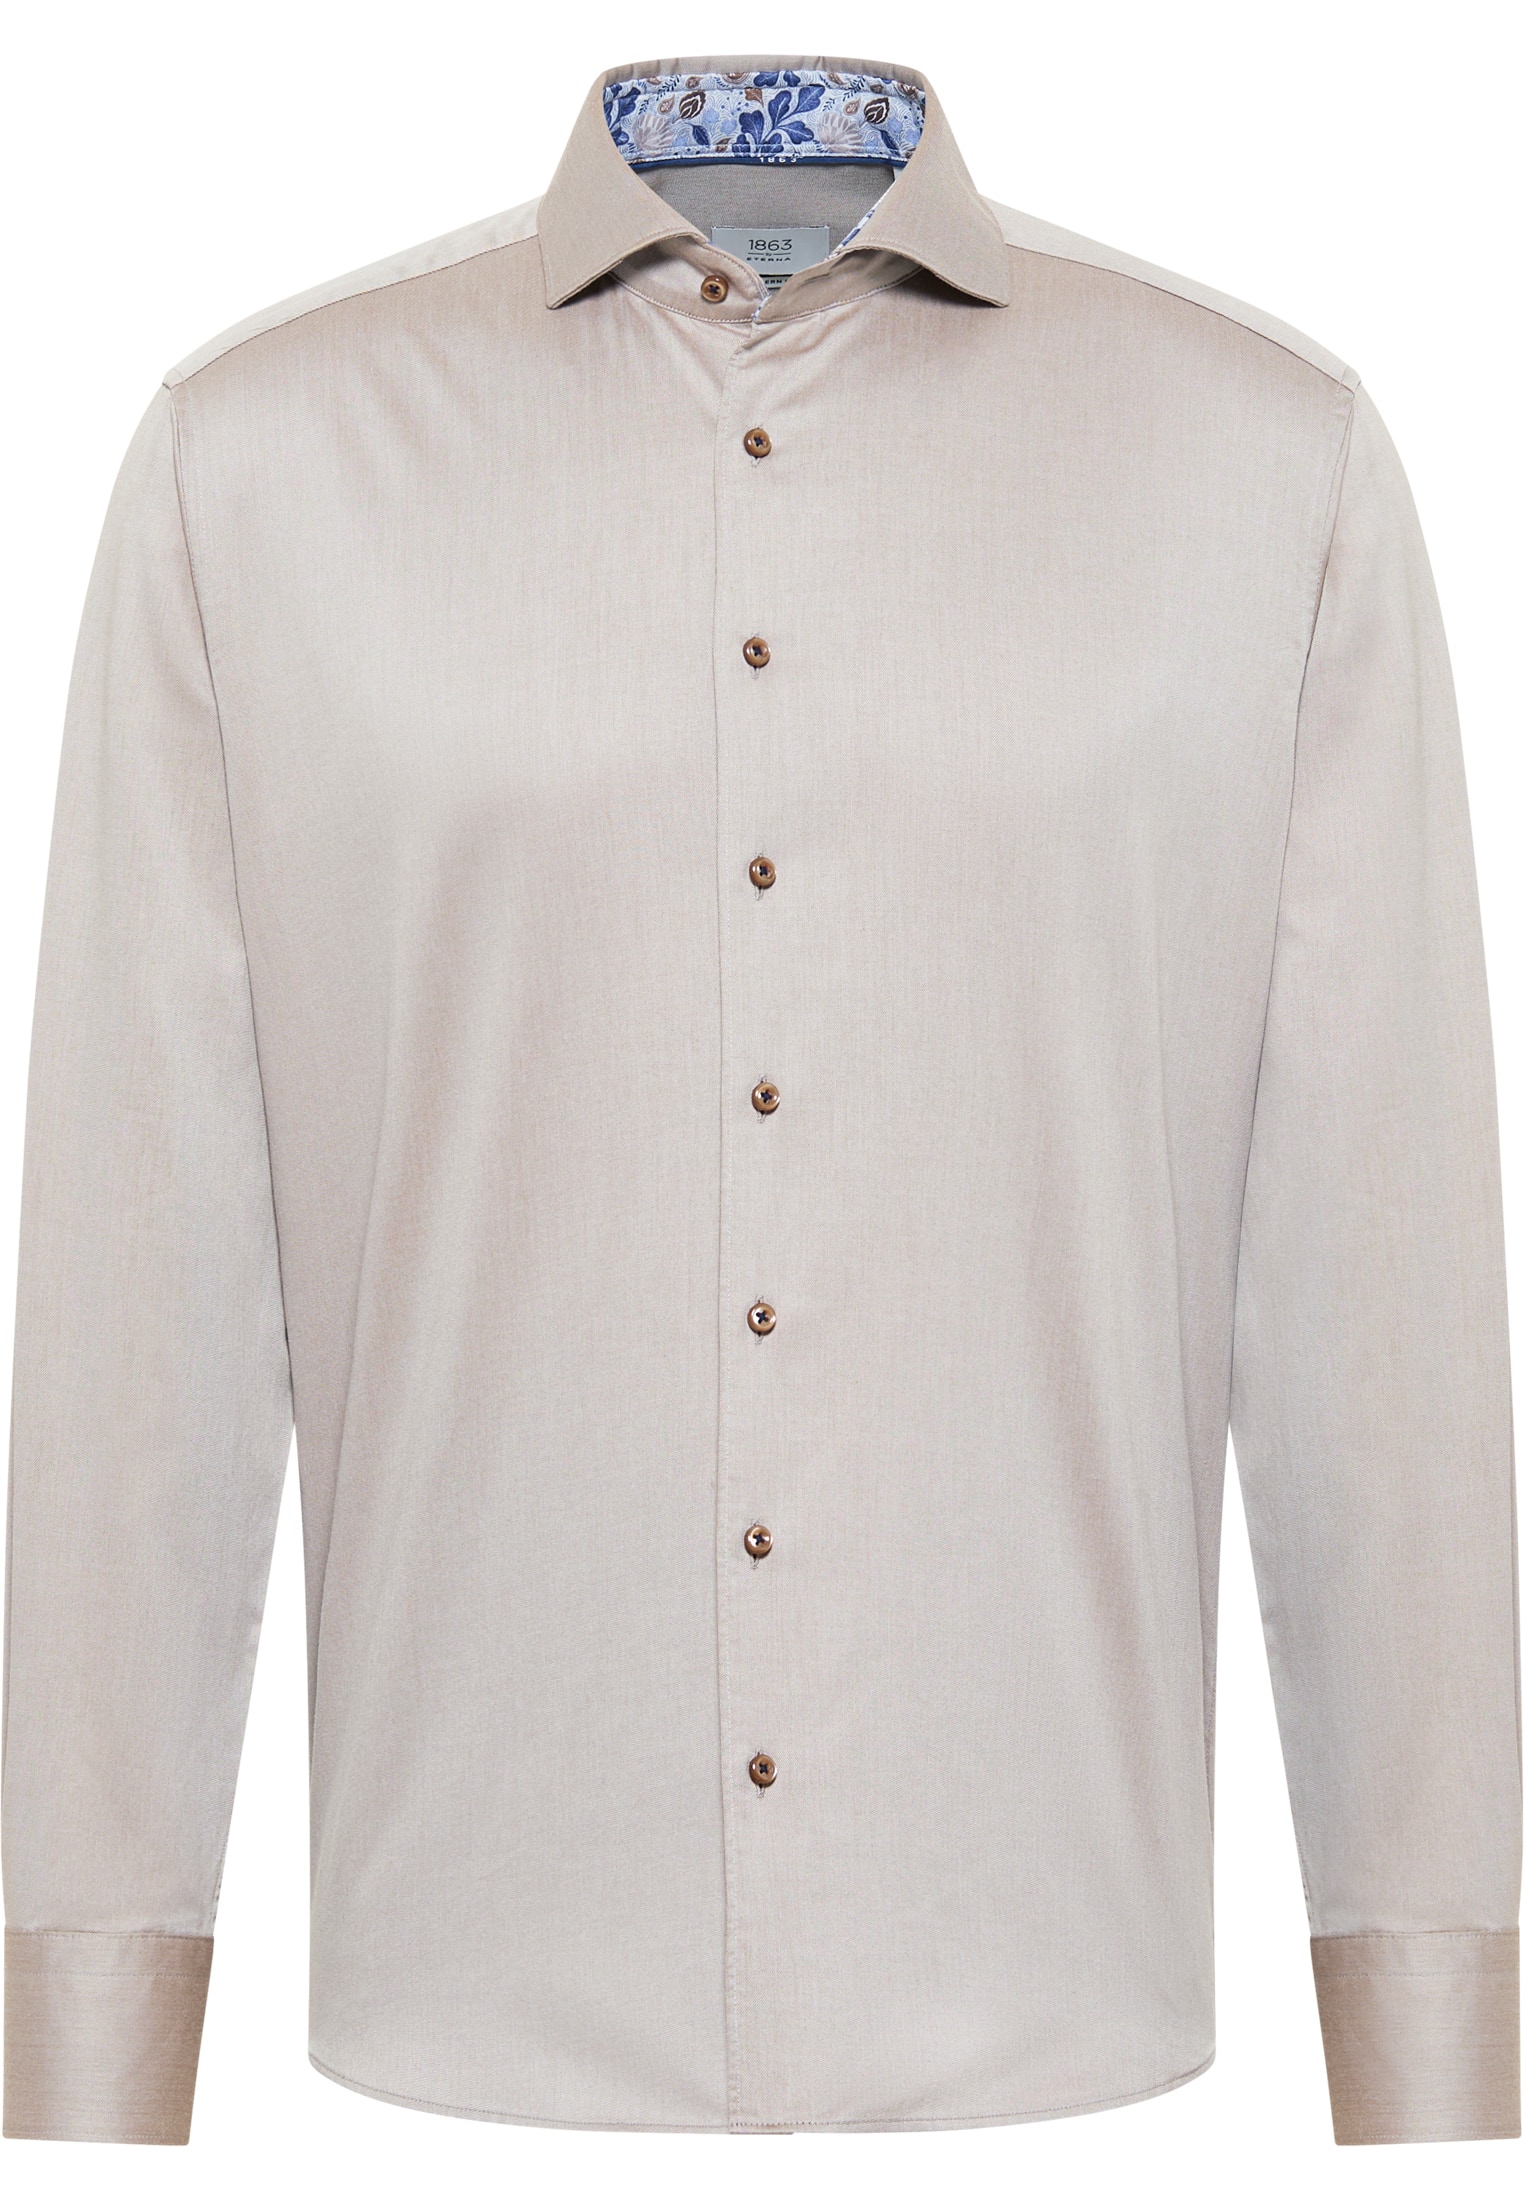 MODERN FIT Soft Luxury Shirt in hazelnut plain